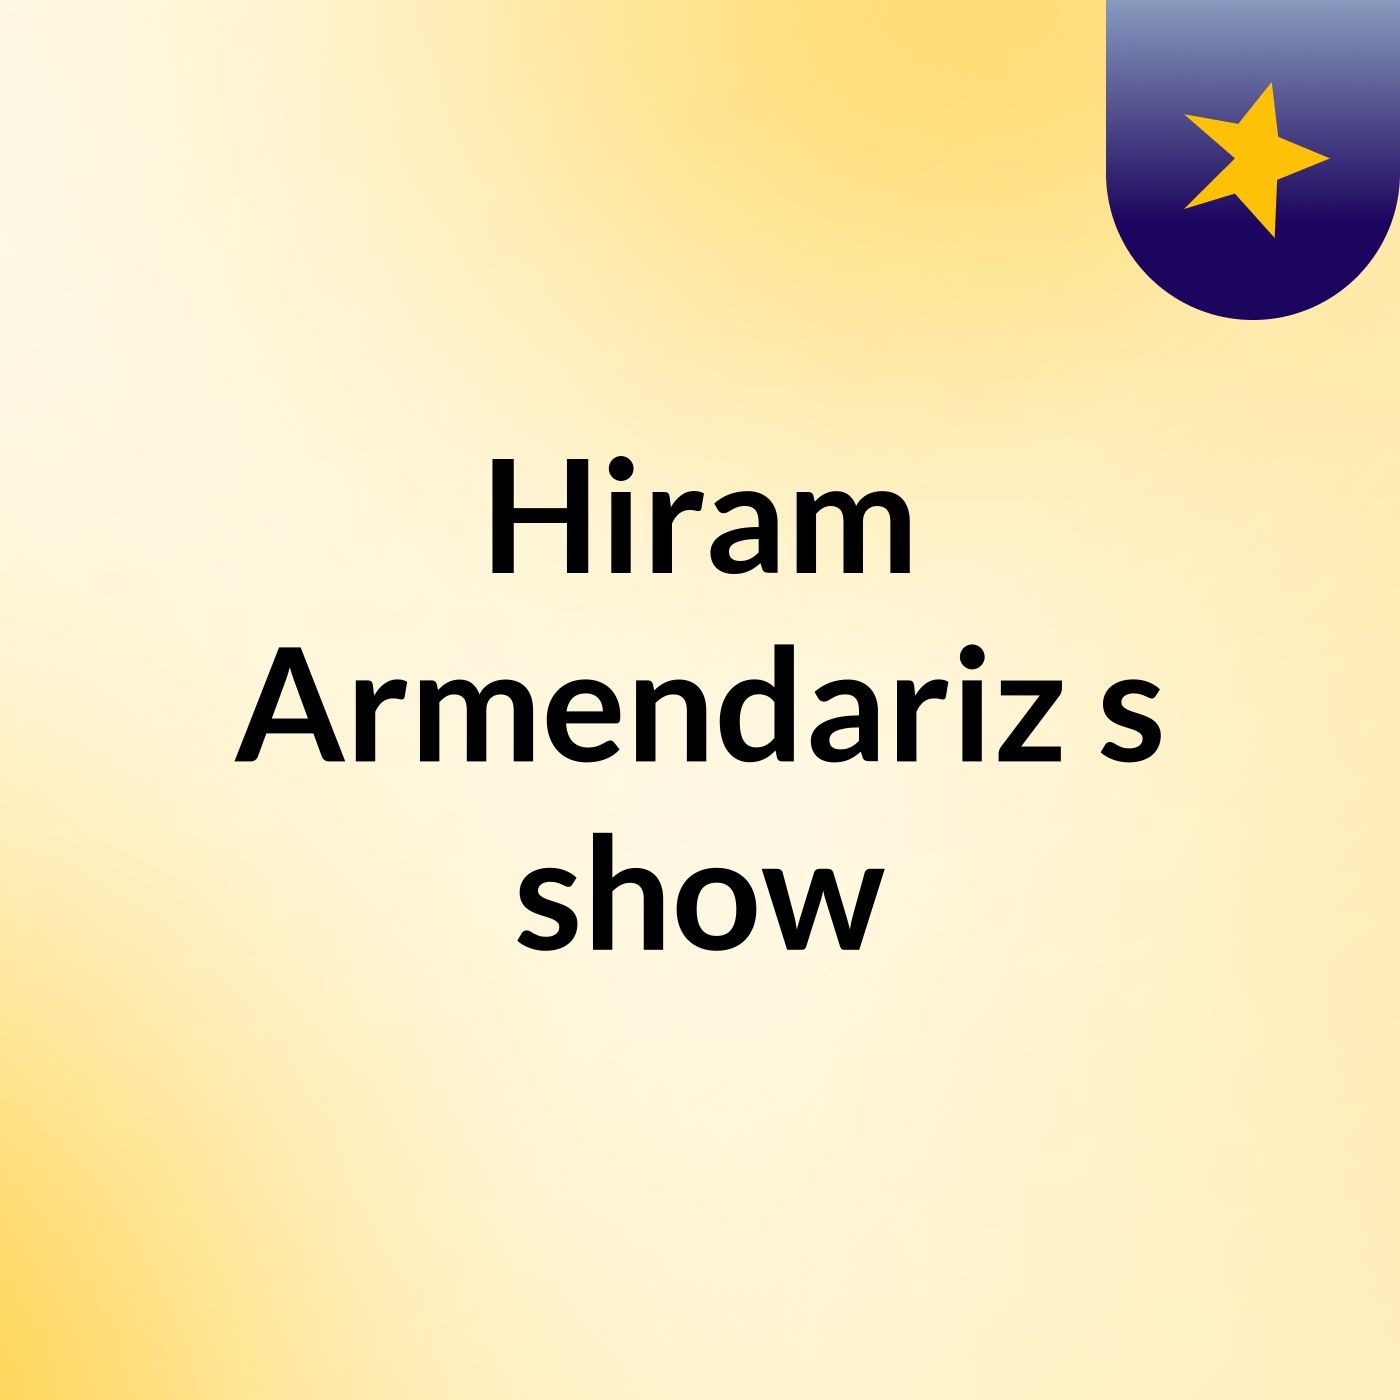 Hiram Armendariz's show